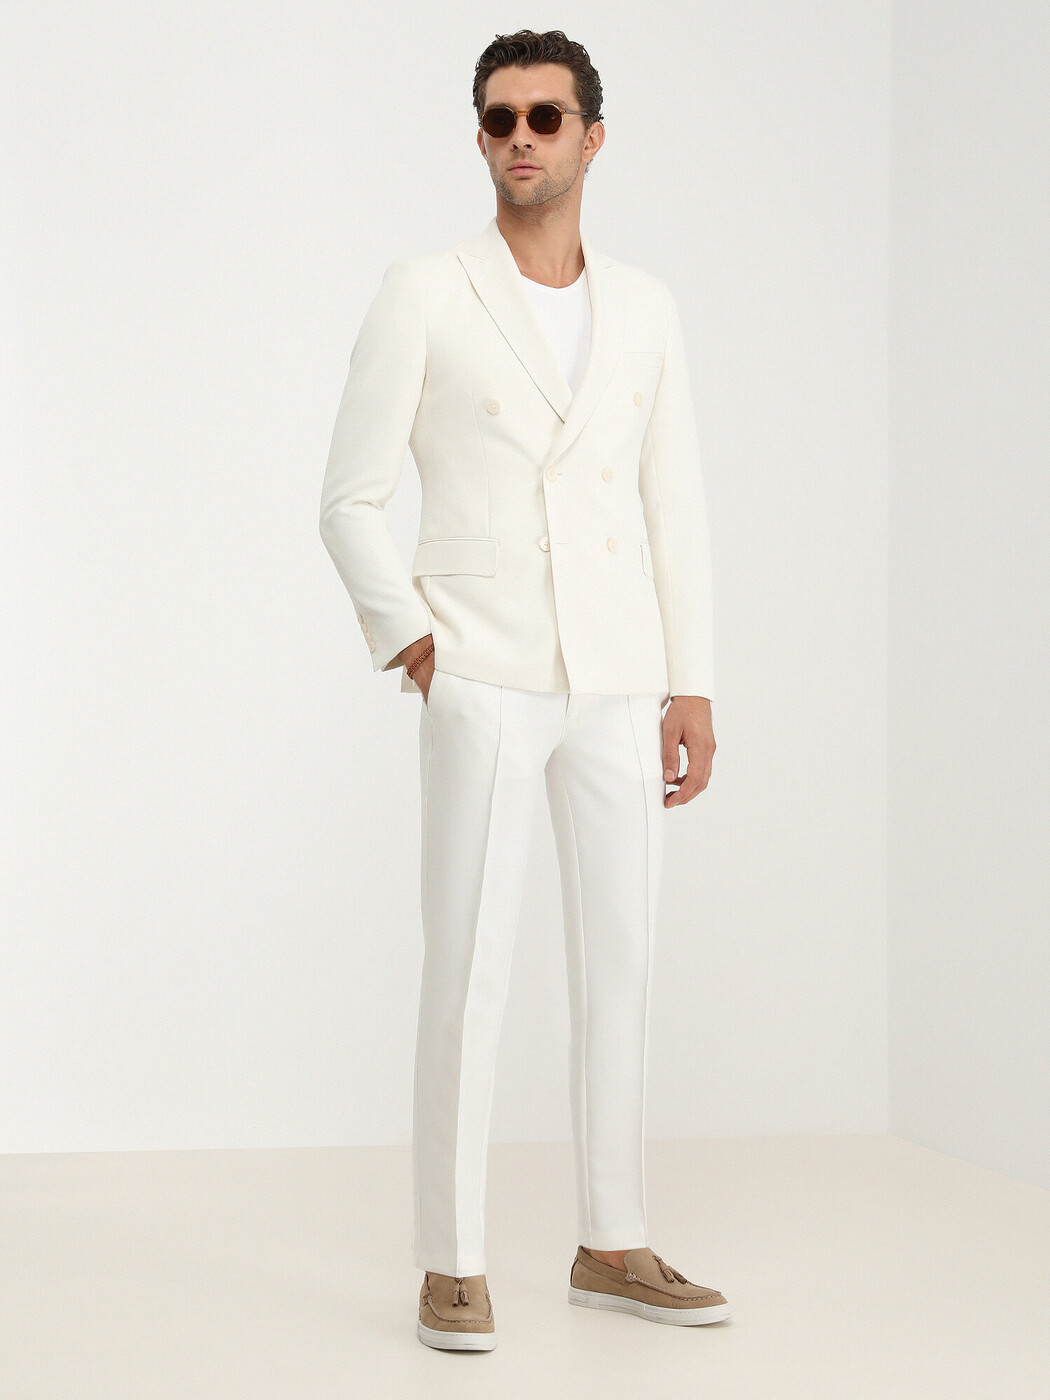 KİP - Beyaz Düz Slim Fit Ceket (1)